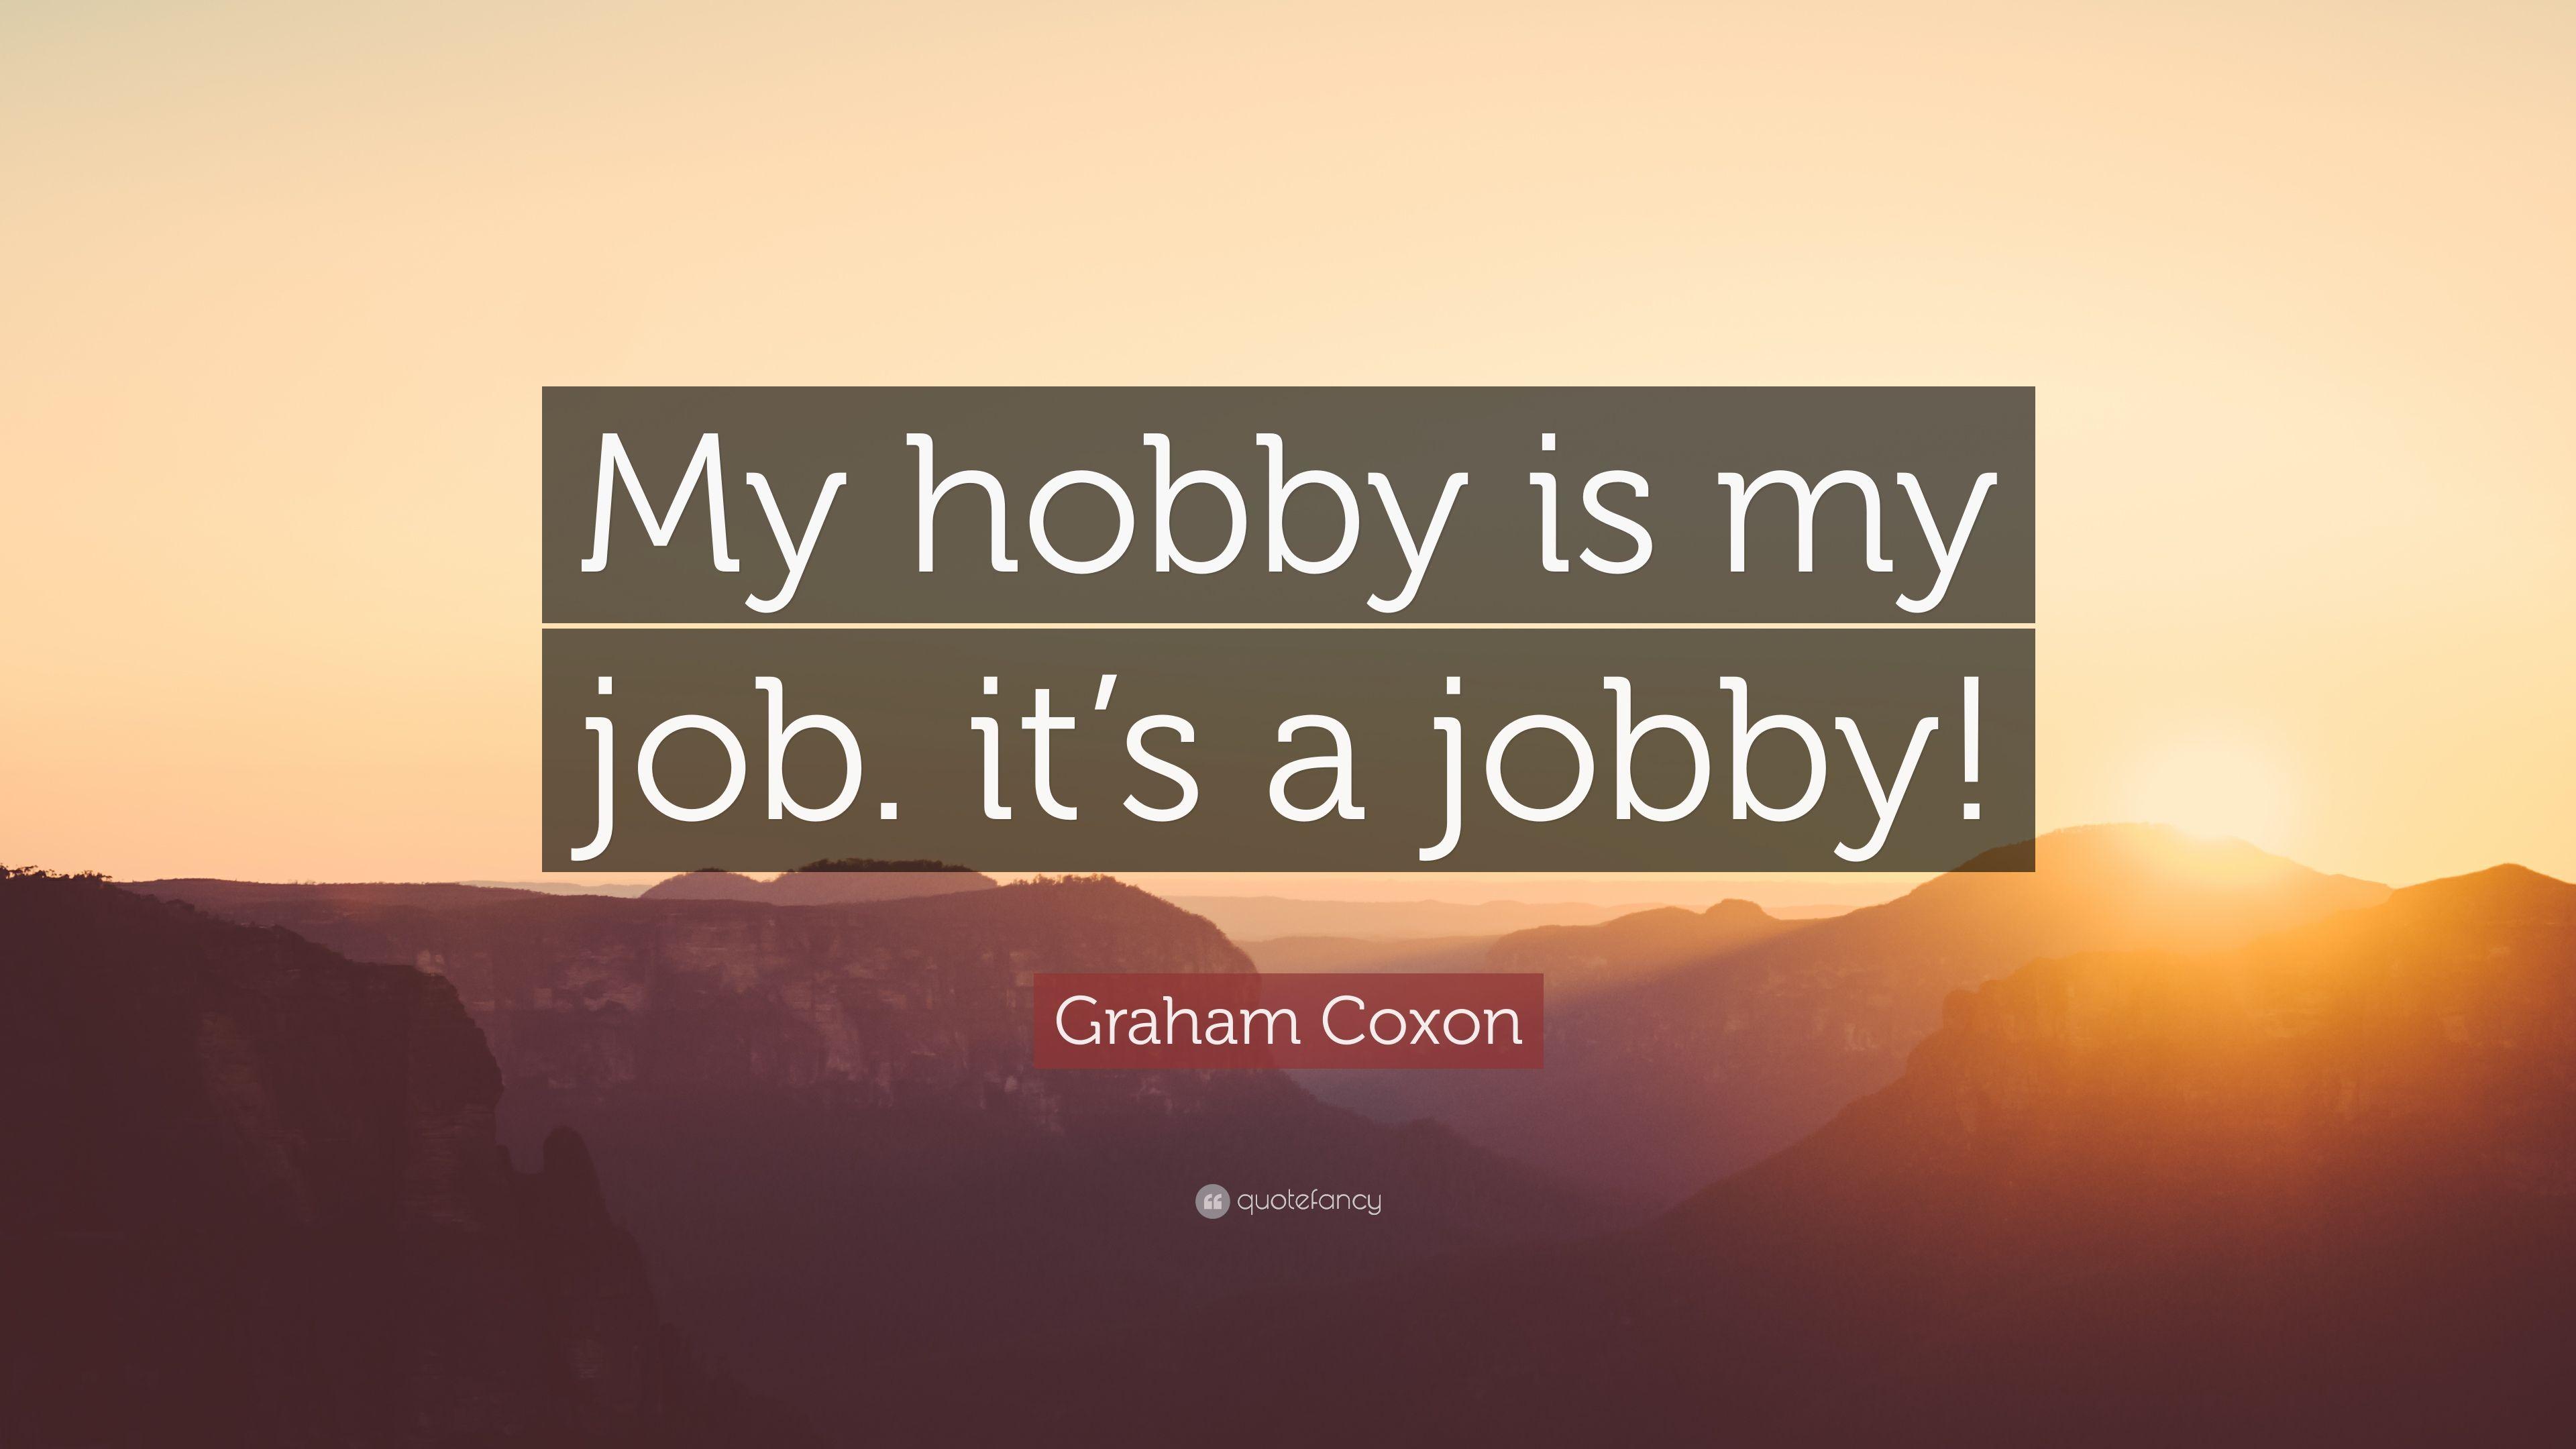 Graham Coxon Quote: “My hobby is my job. it's a jobby!” 12